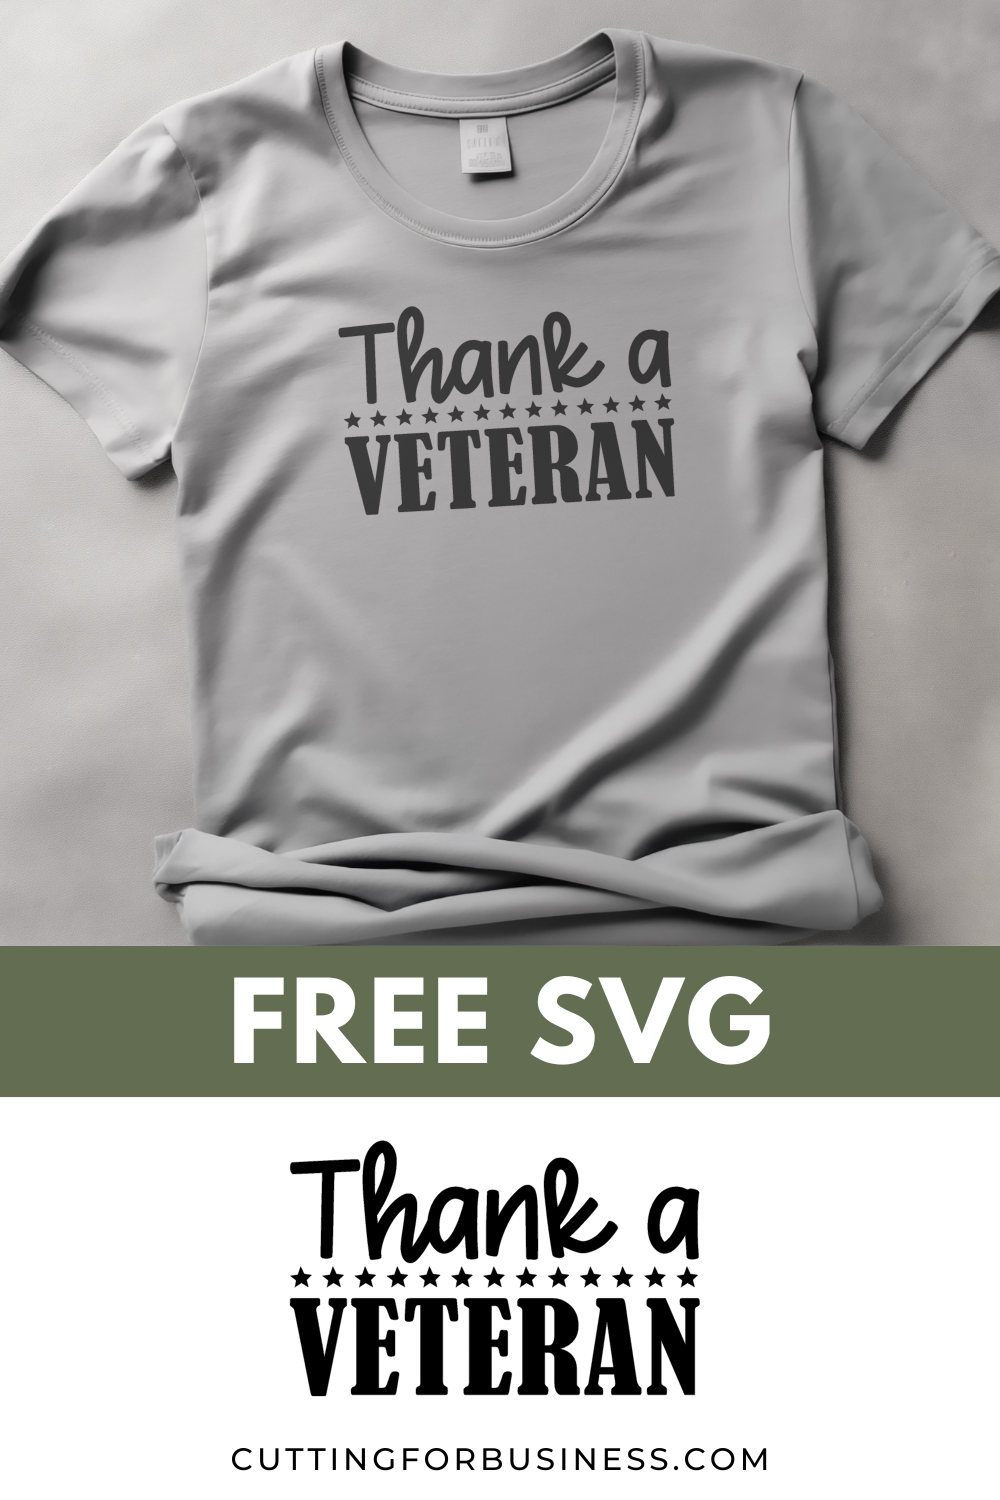 Free Military SVG - Thank a Veteran - cuttingforbusiness.com